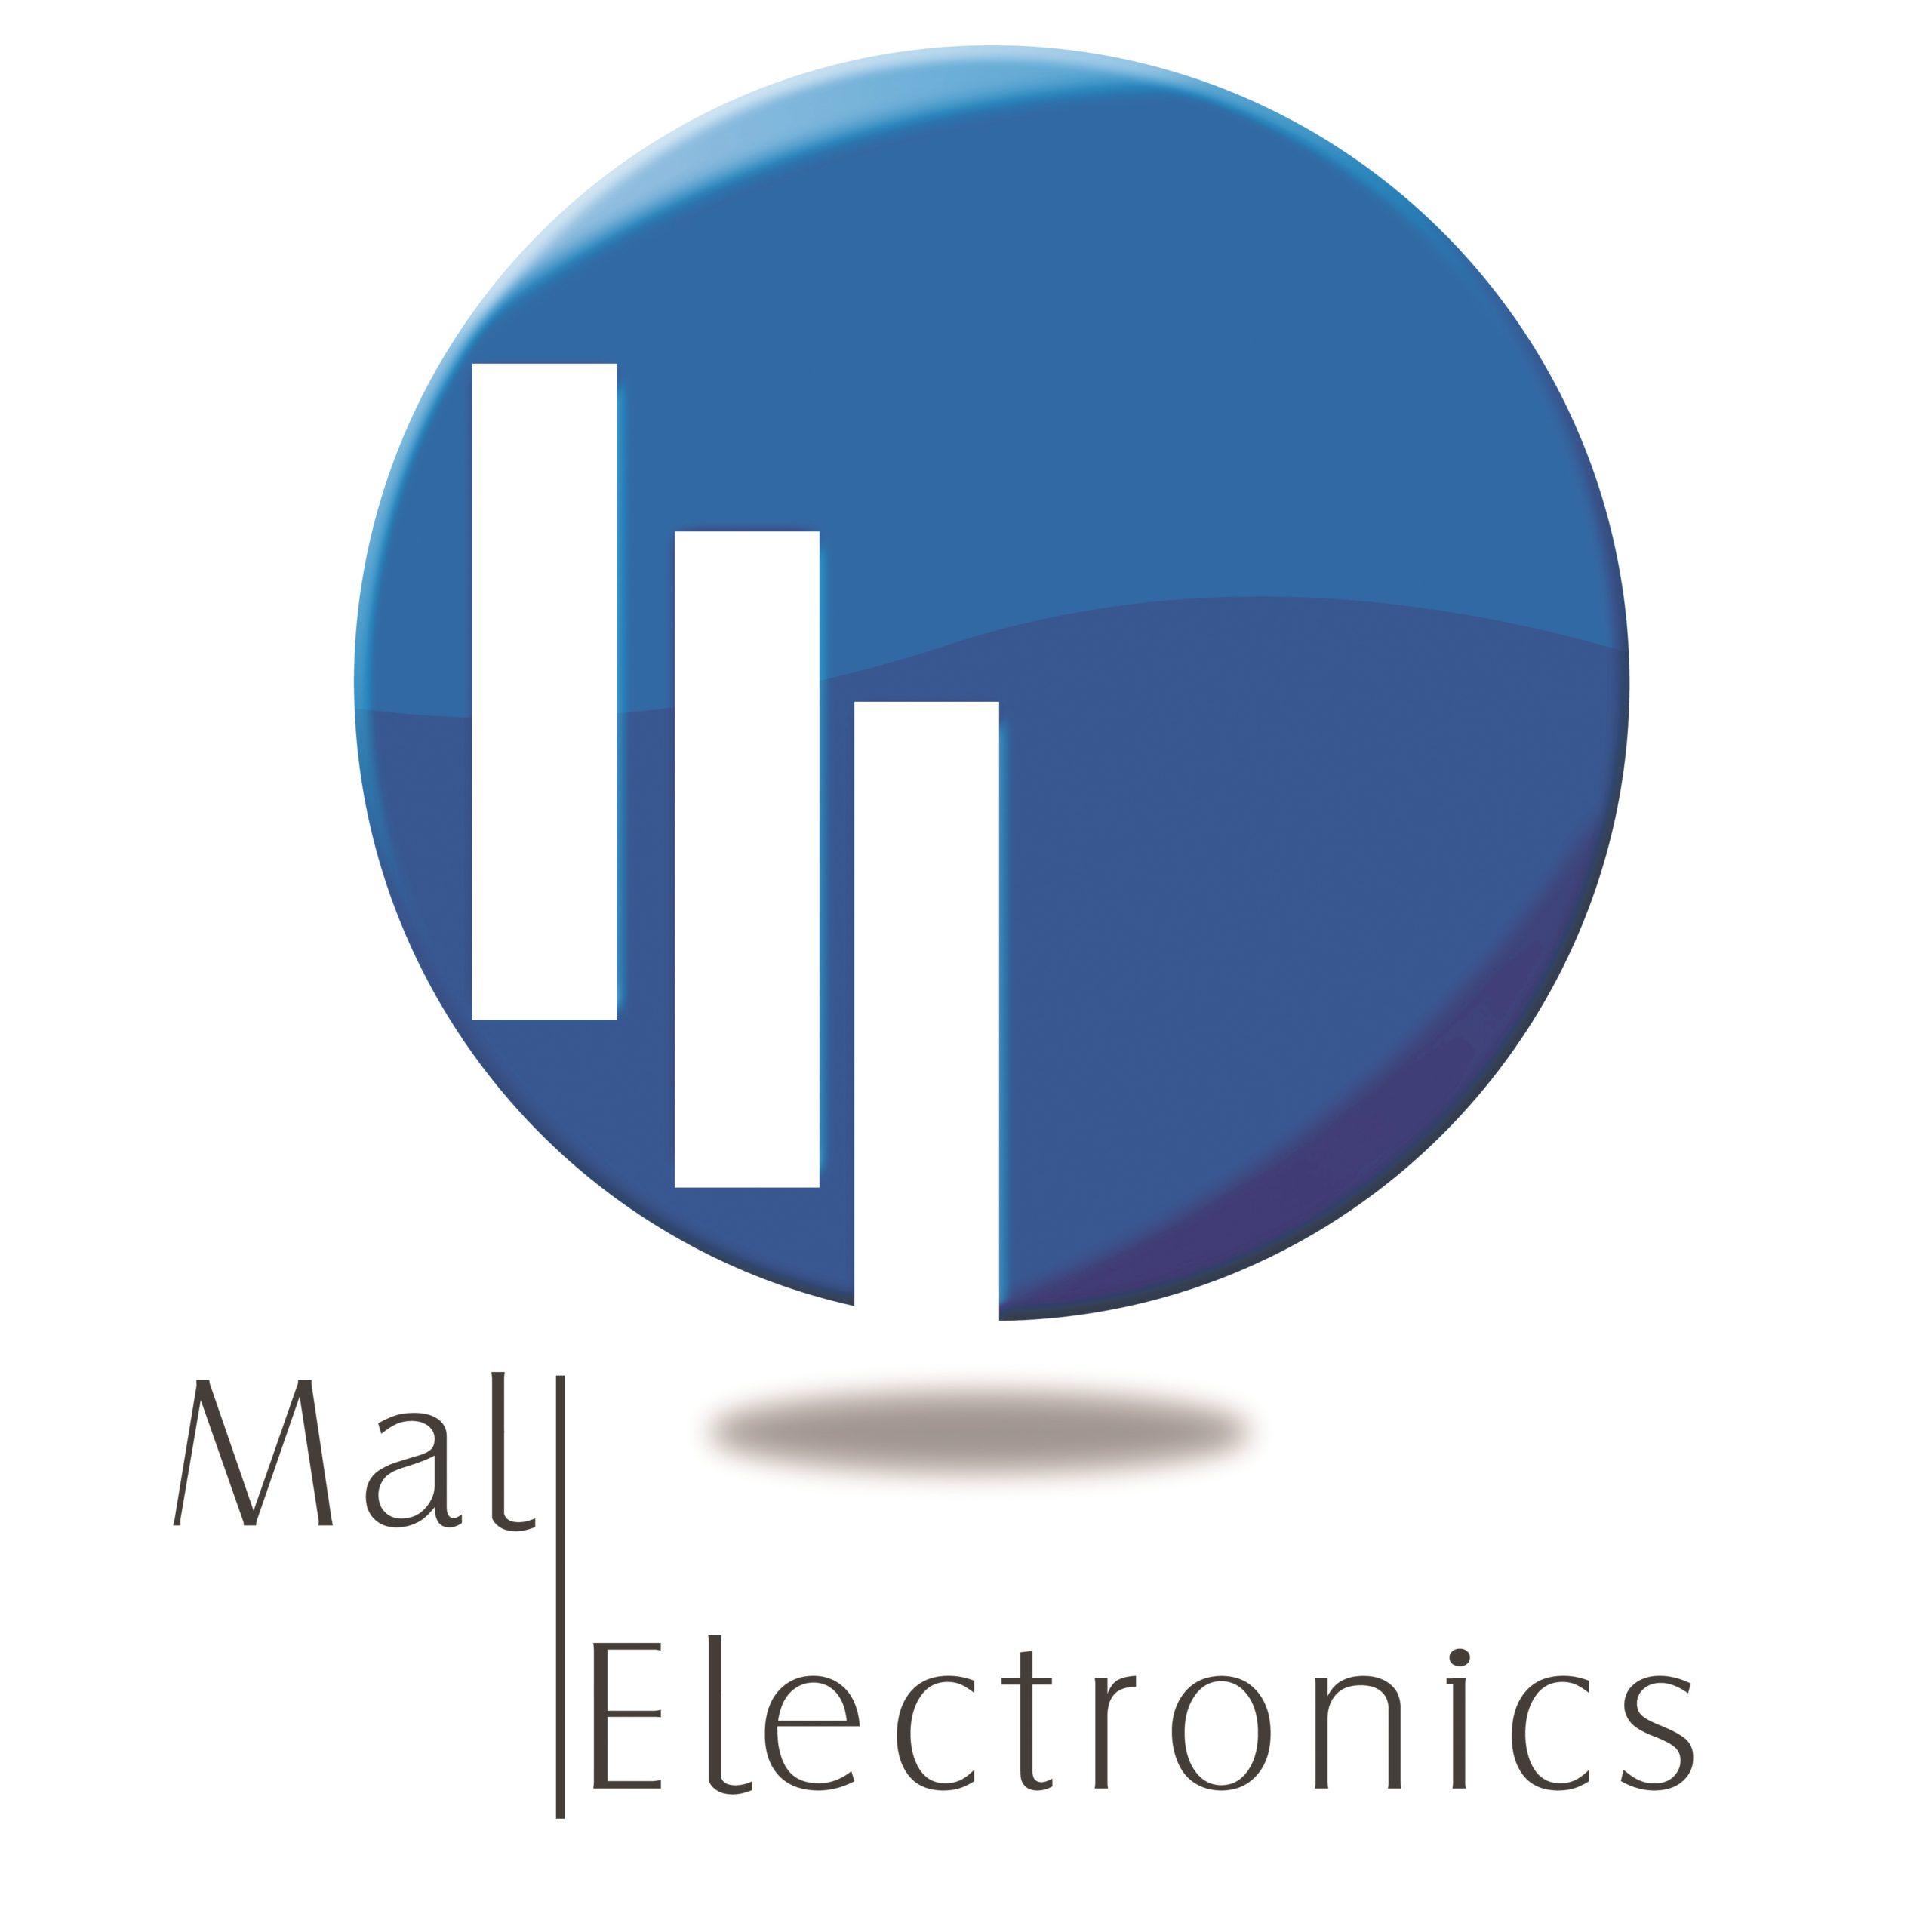 Mal Electronics